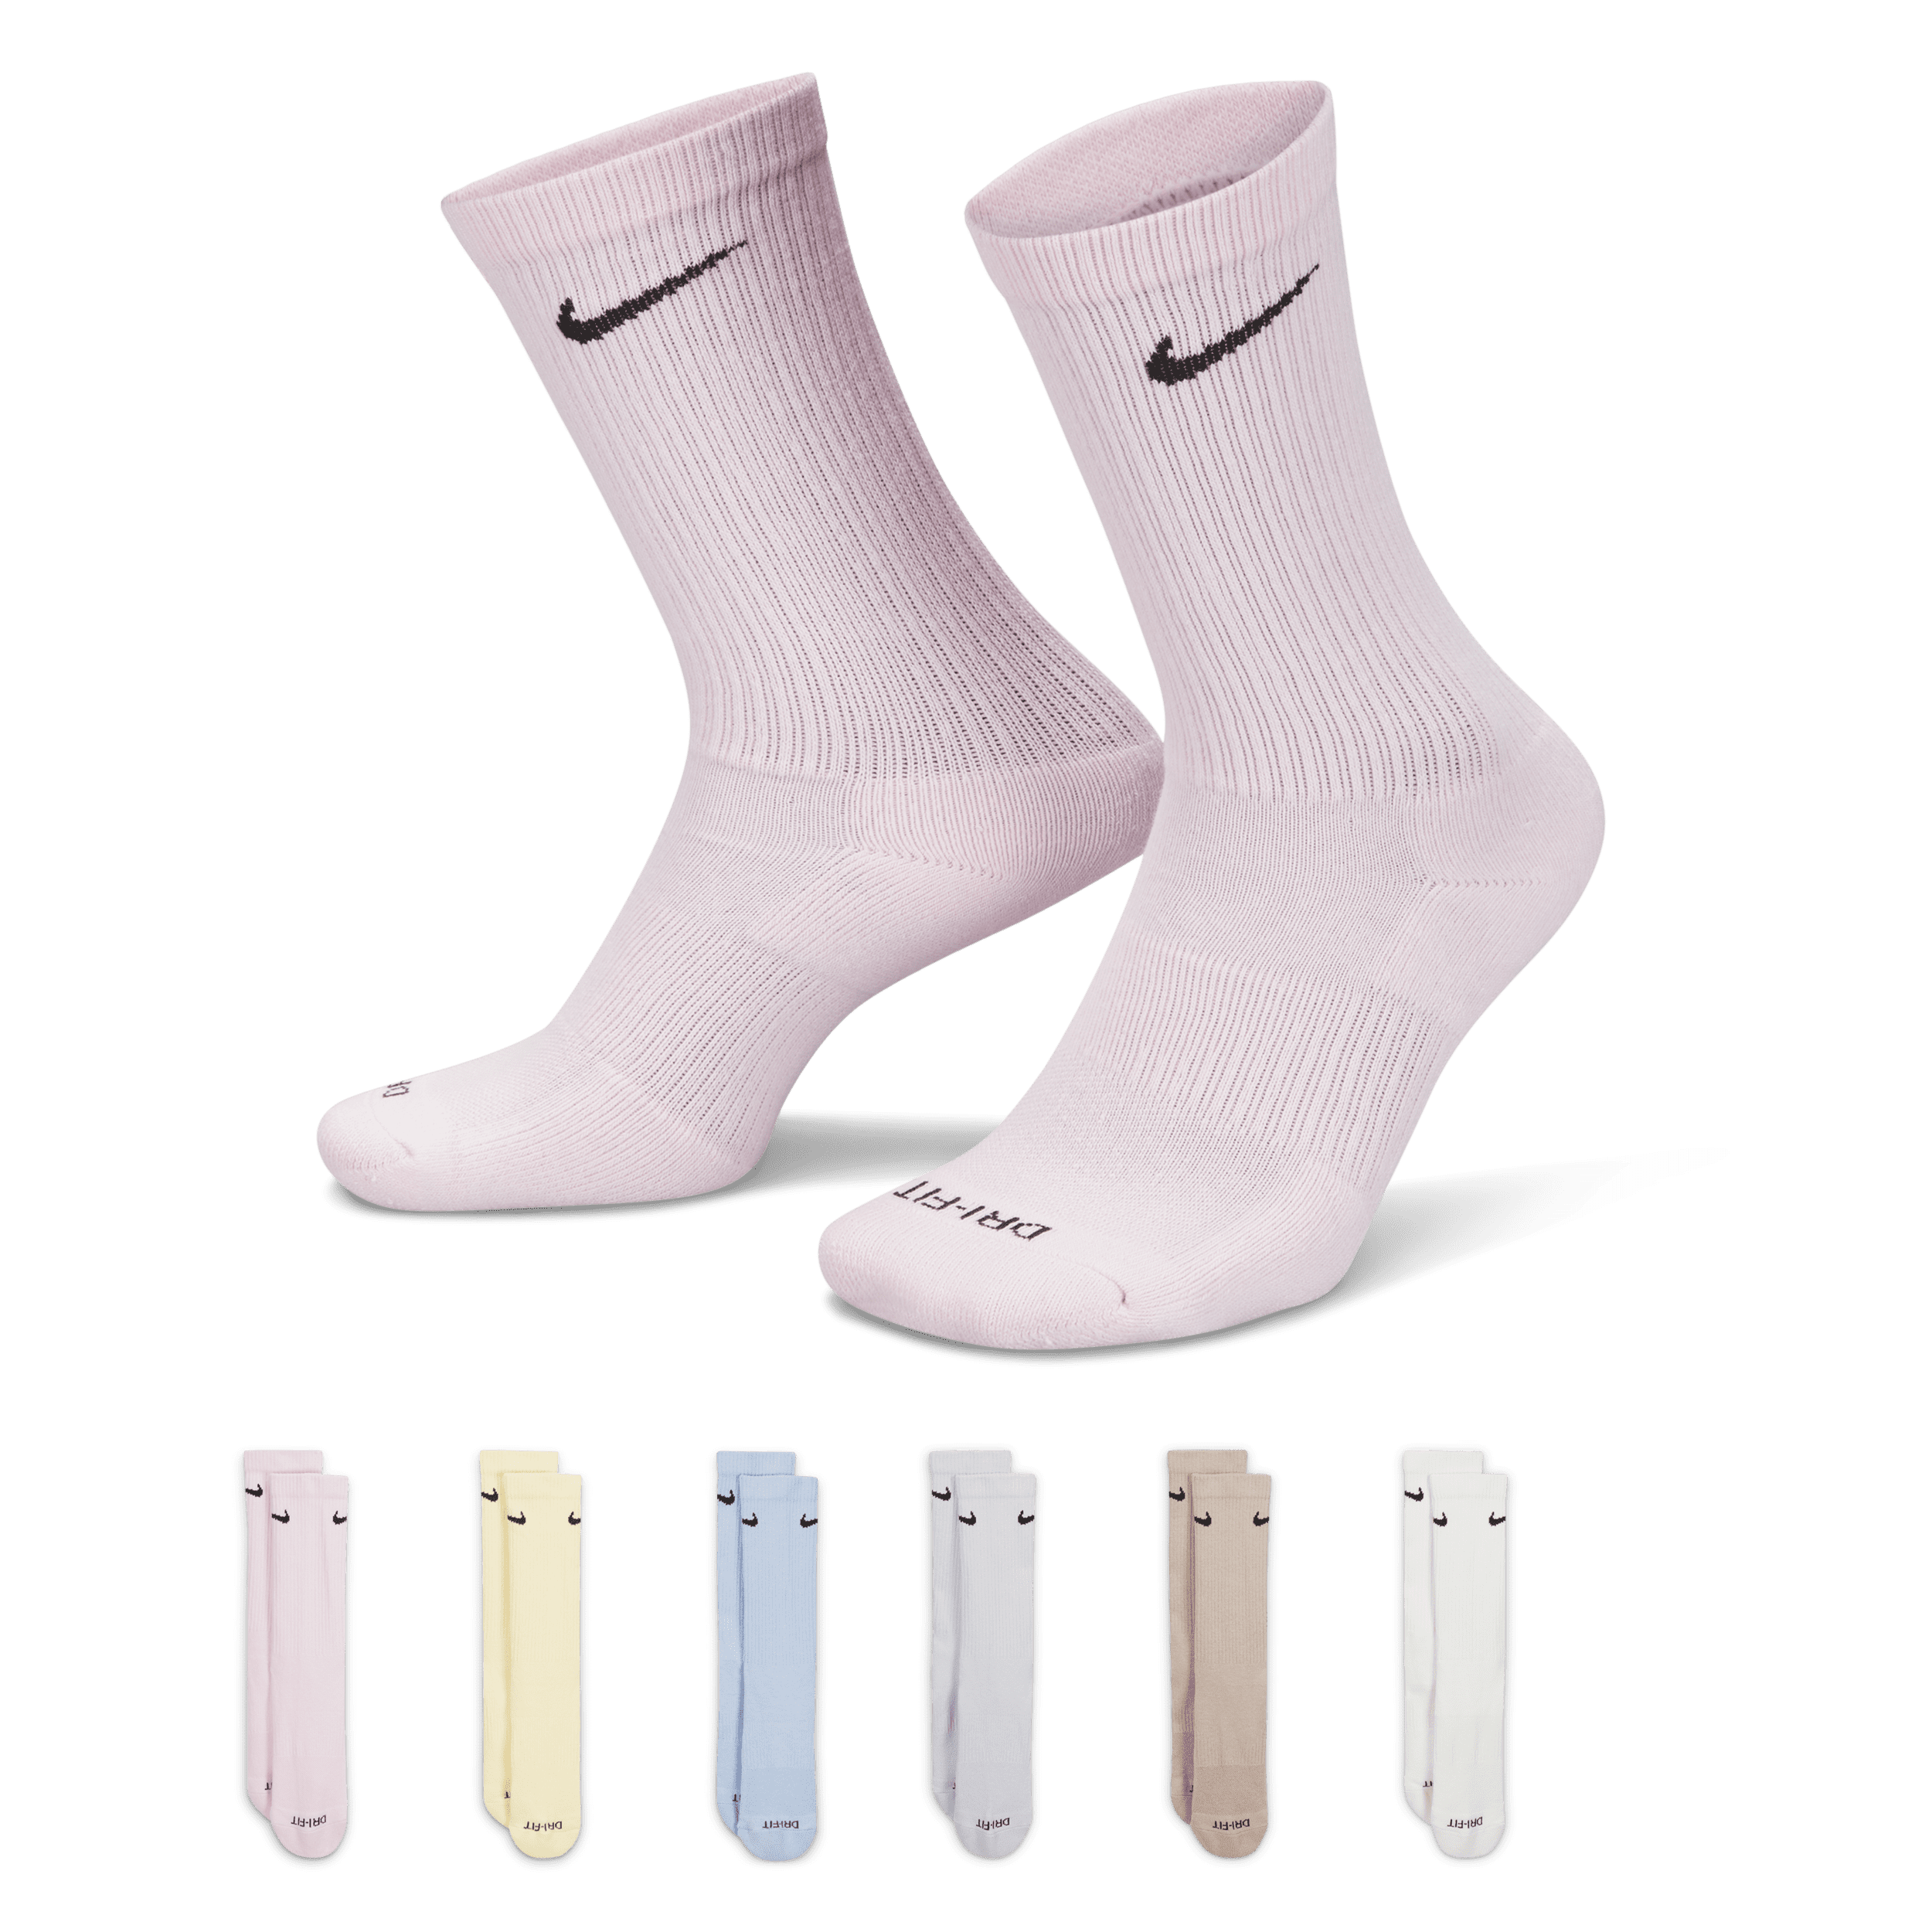 Calze da training Nike Everyday Plus Cushioned di media lunghezza (6 paia) - Multicolore